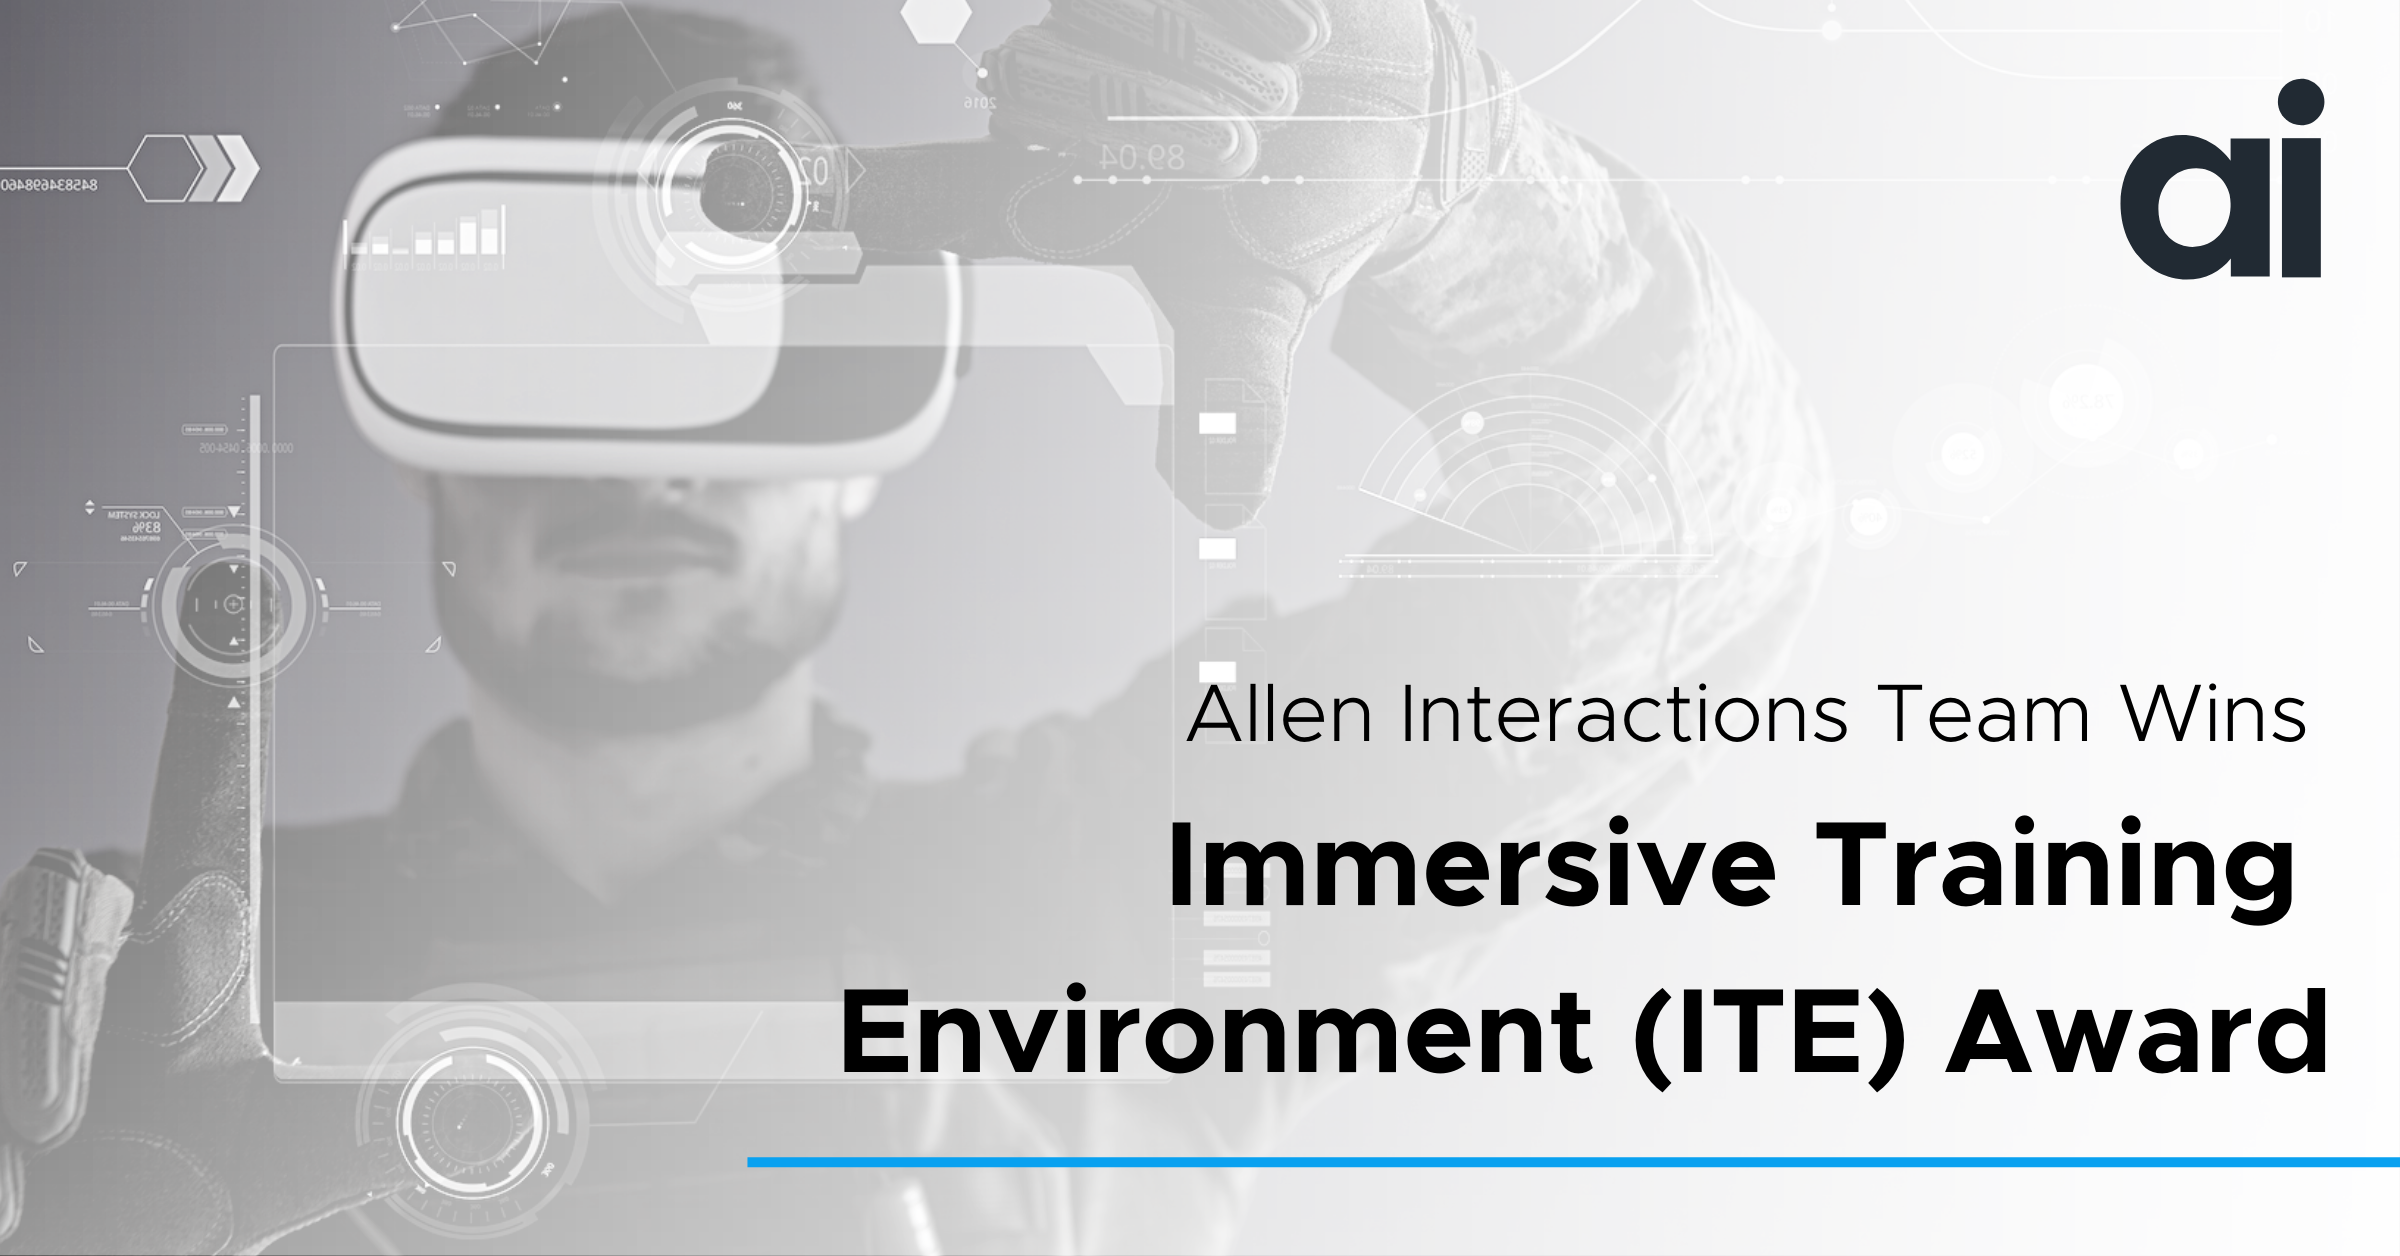 Allen Interactions Team Wins Immersive Training Environment (ITE) Award